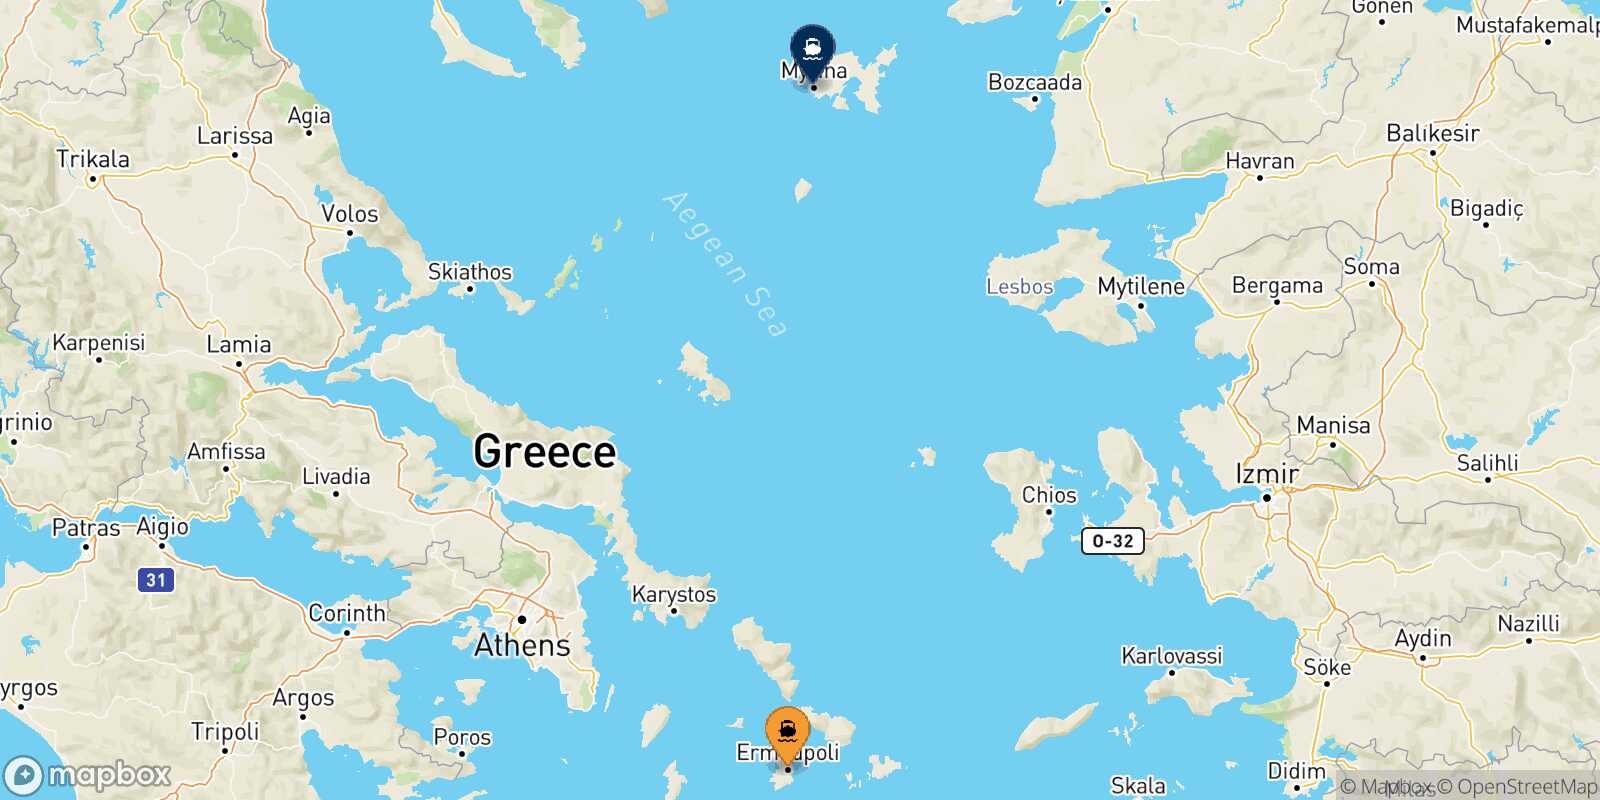 Mappa della rotta Syros Mirina (Limnos)